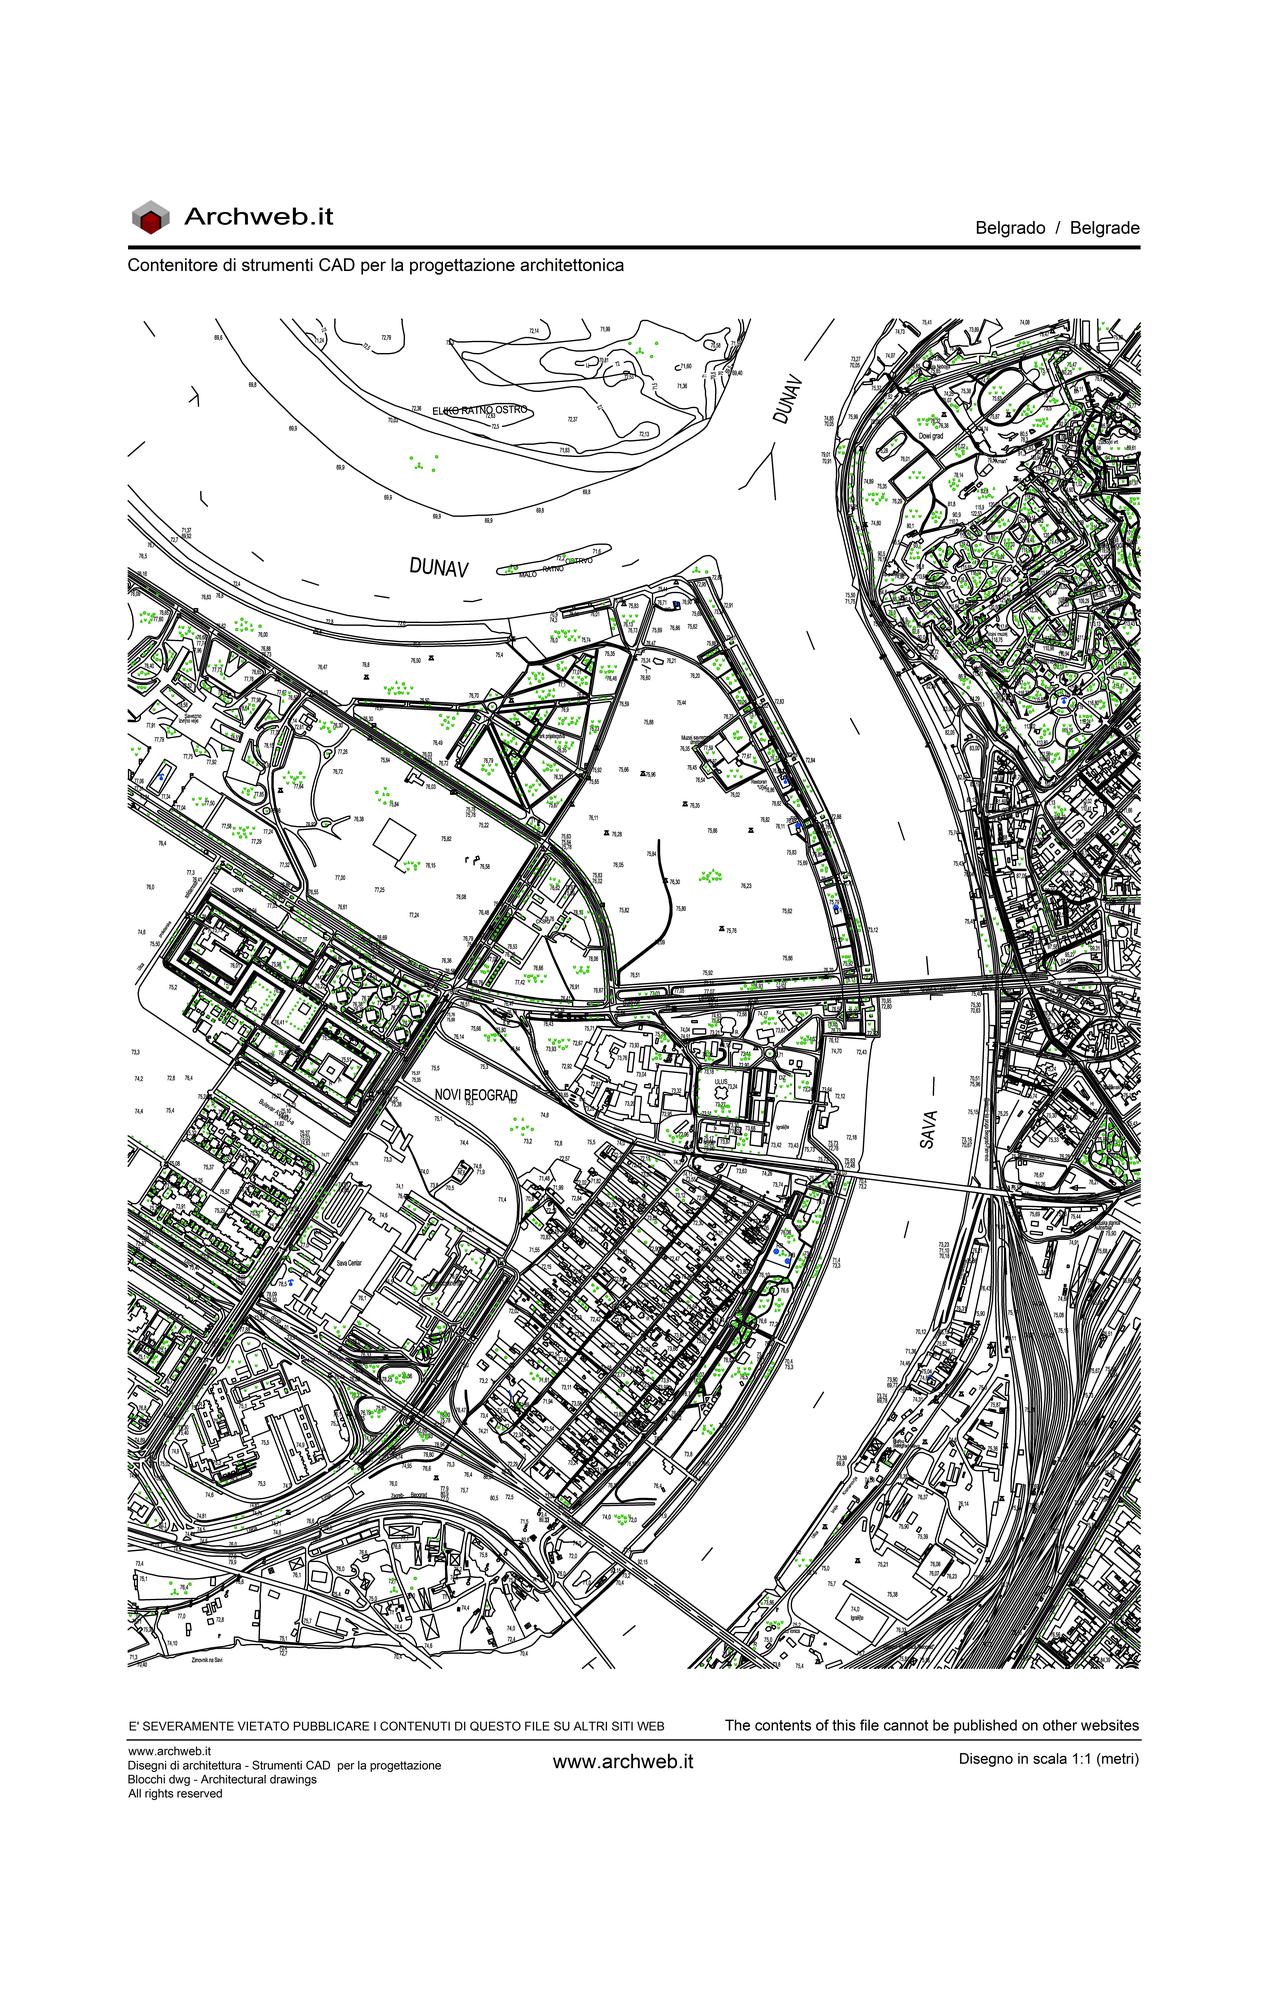 Belgrade preview plan dwg Archweb